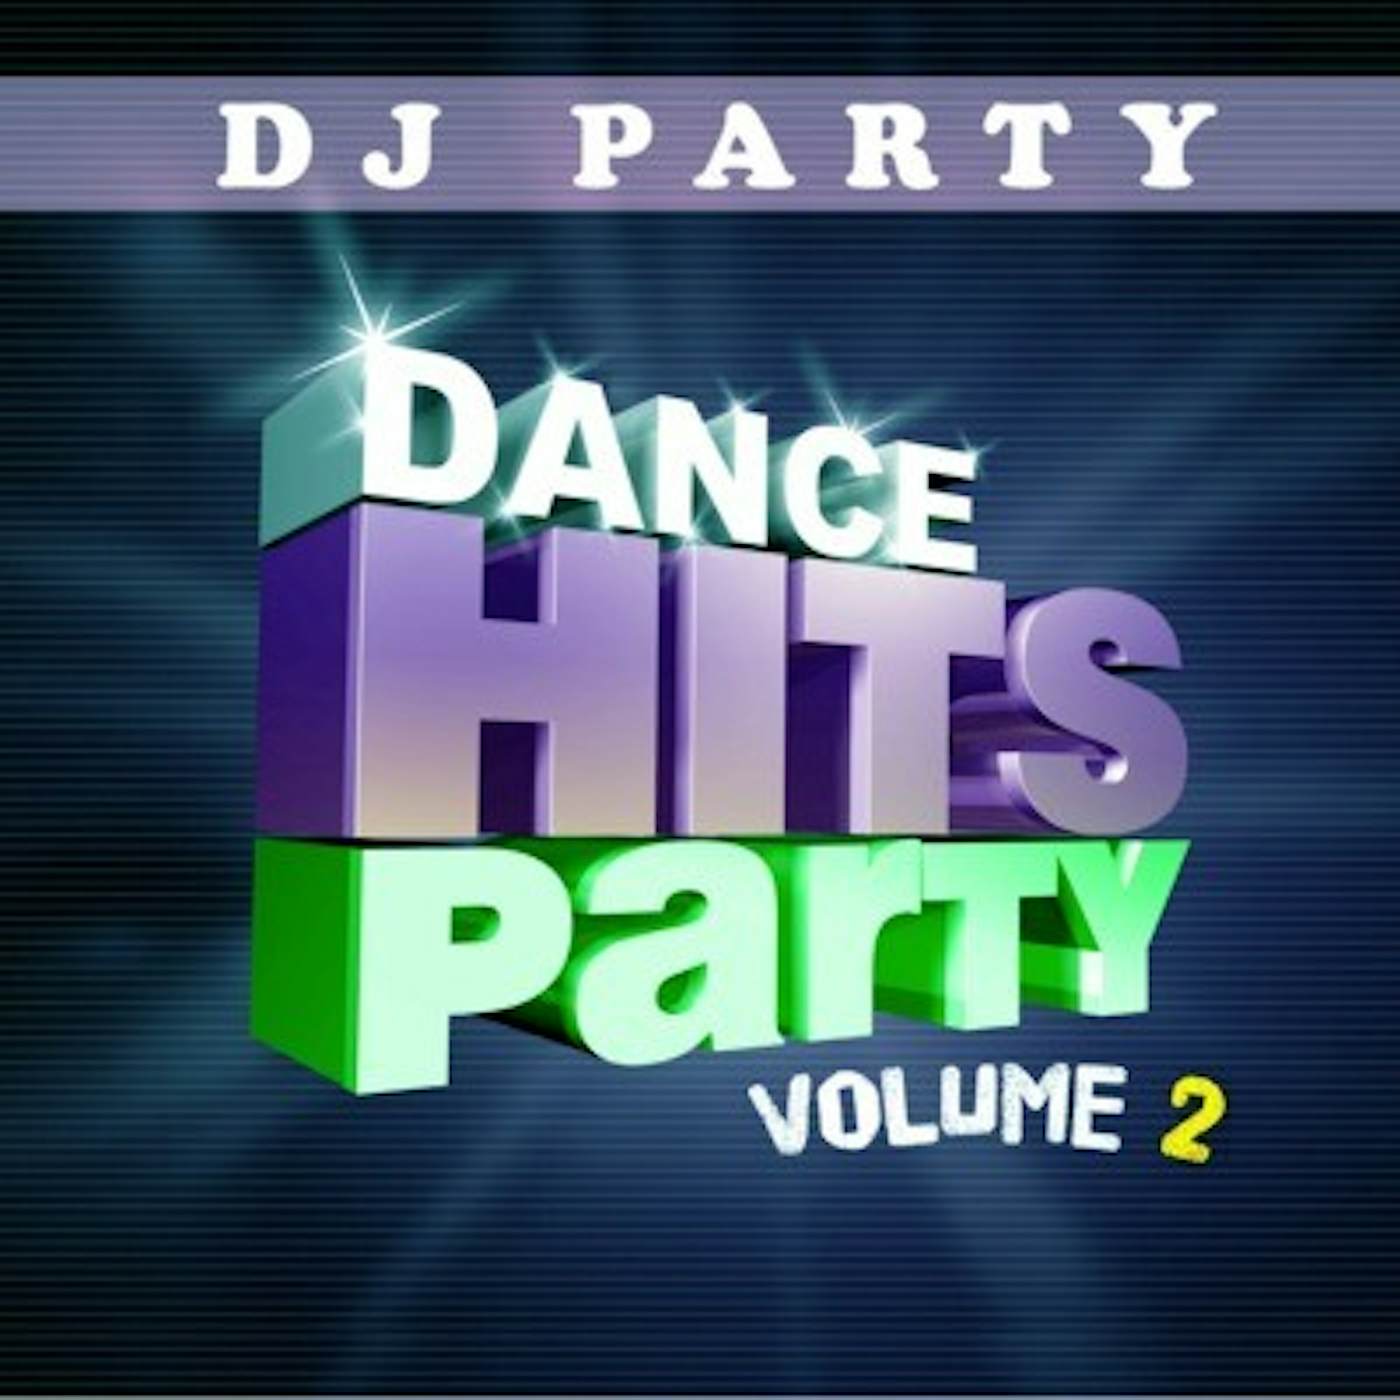 DJ Party DANCE HITS PARTY VOL. 2 CD